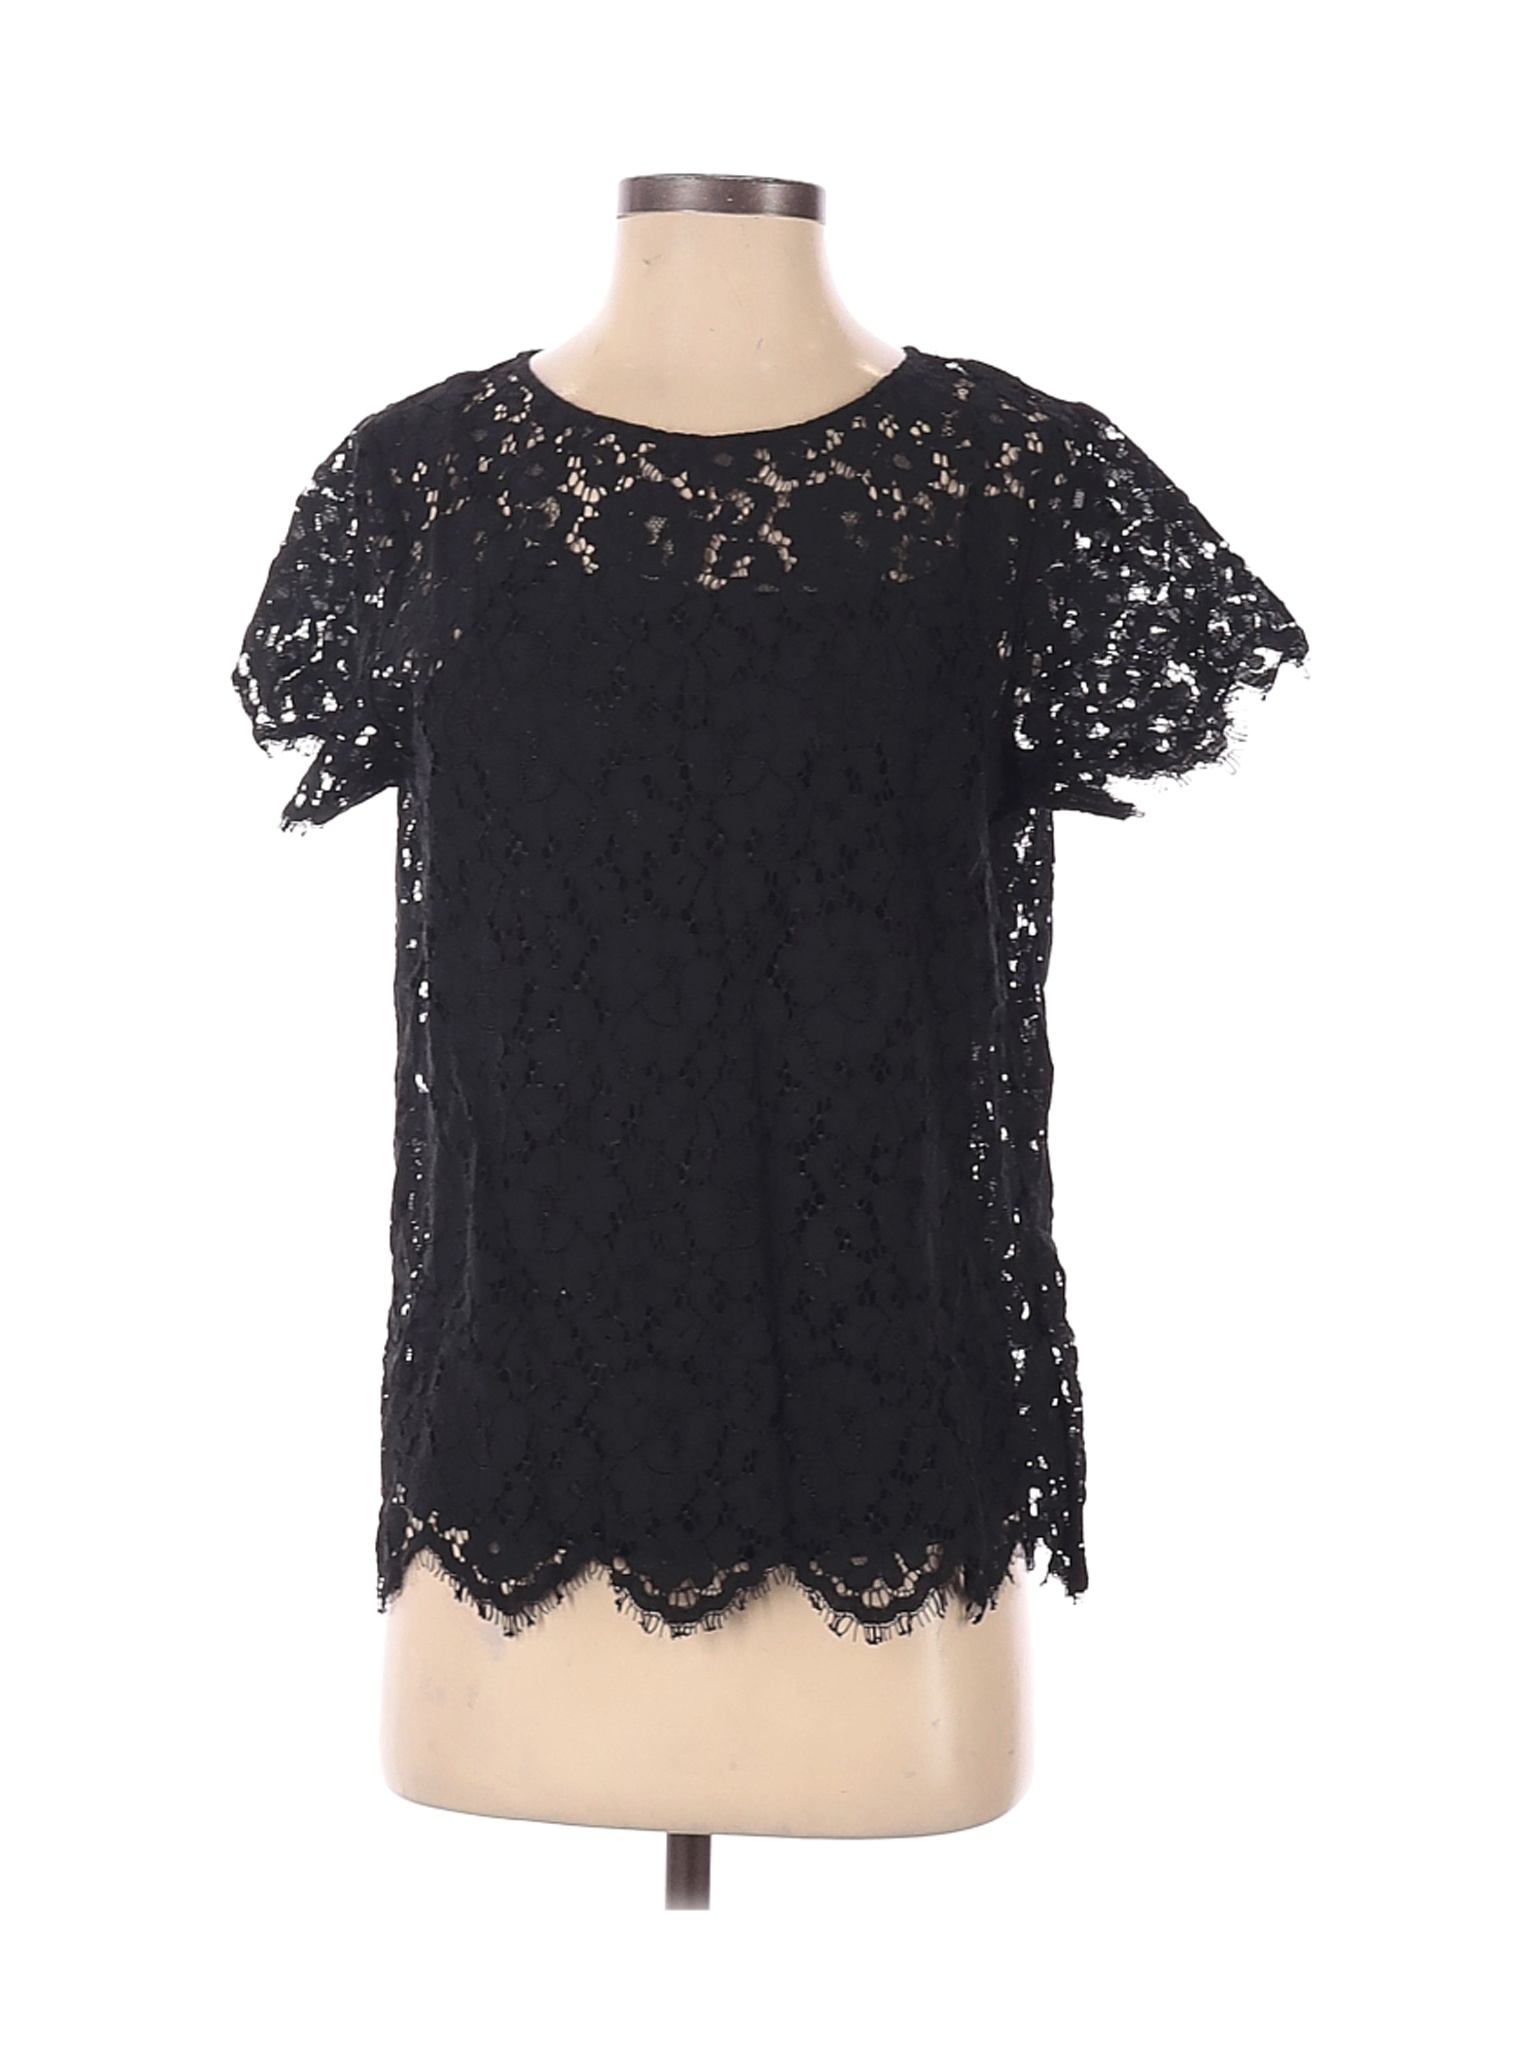 Rafaella Women Black Short Sleeve Blouse S | eBay